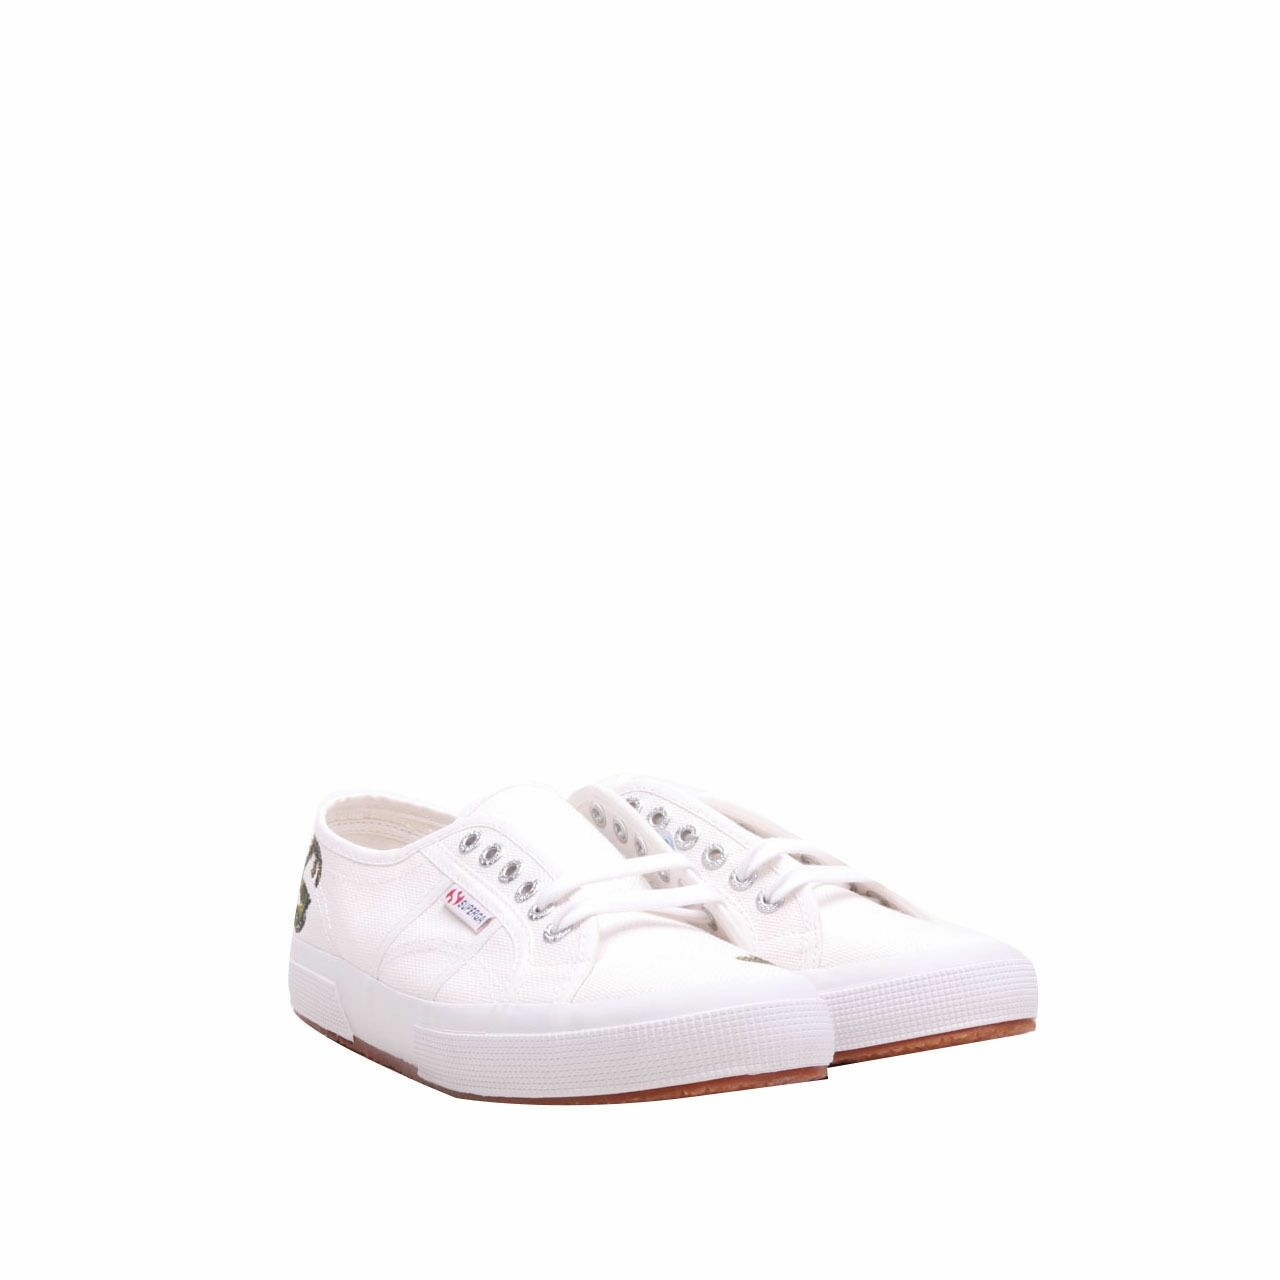 Superga Cotu Classic White Sneakers